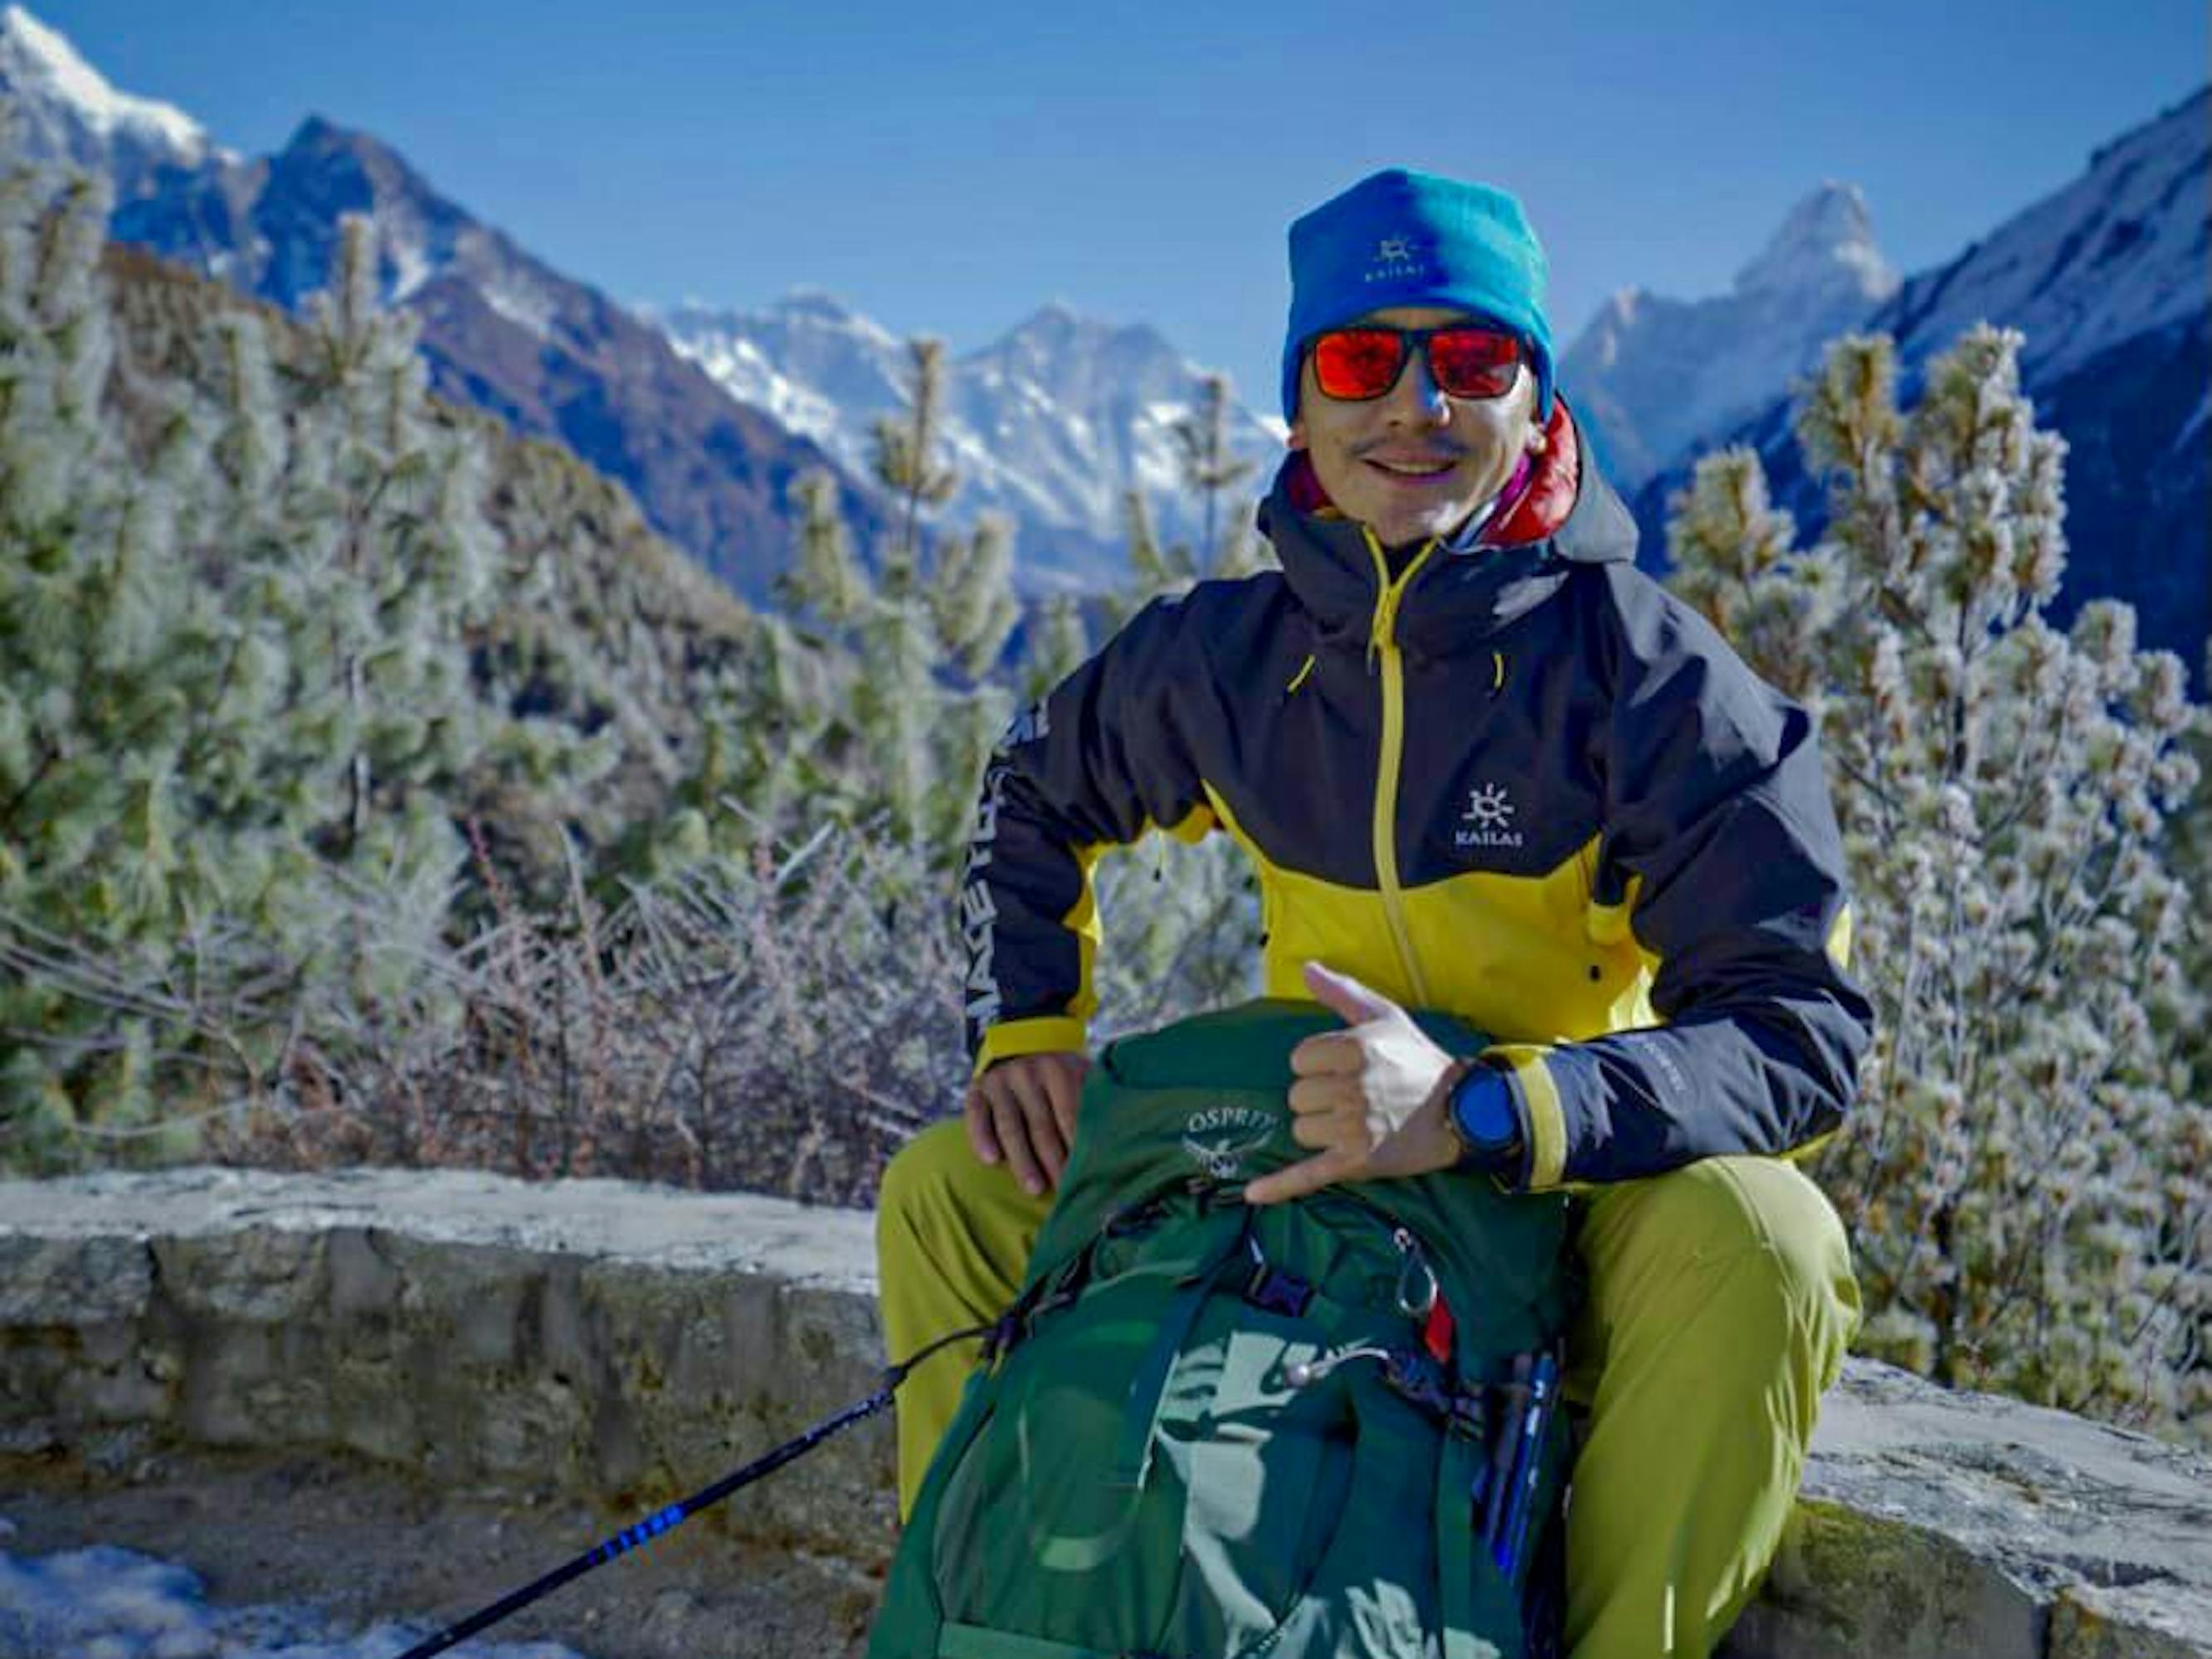 Lakpa Dendi Sherpa holds a giant green bag between his knees.